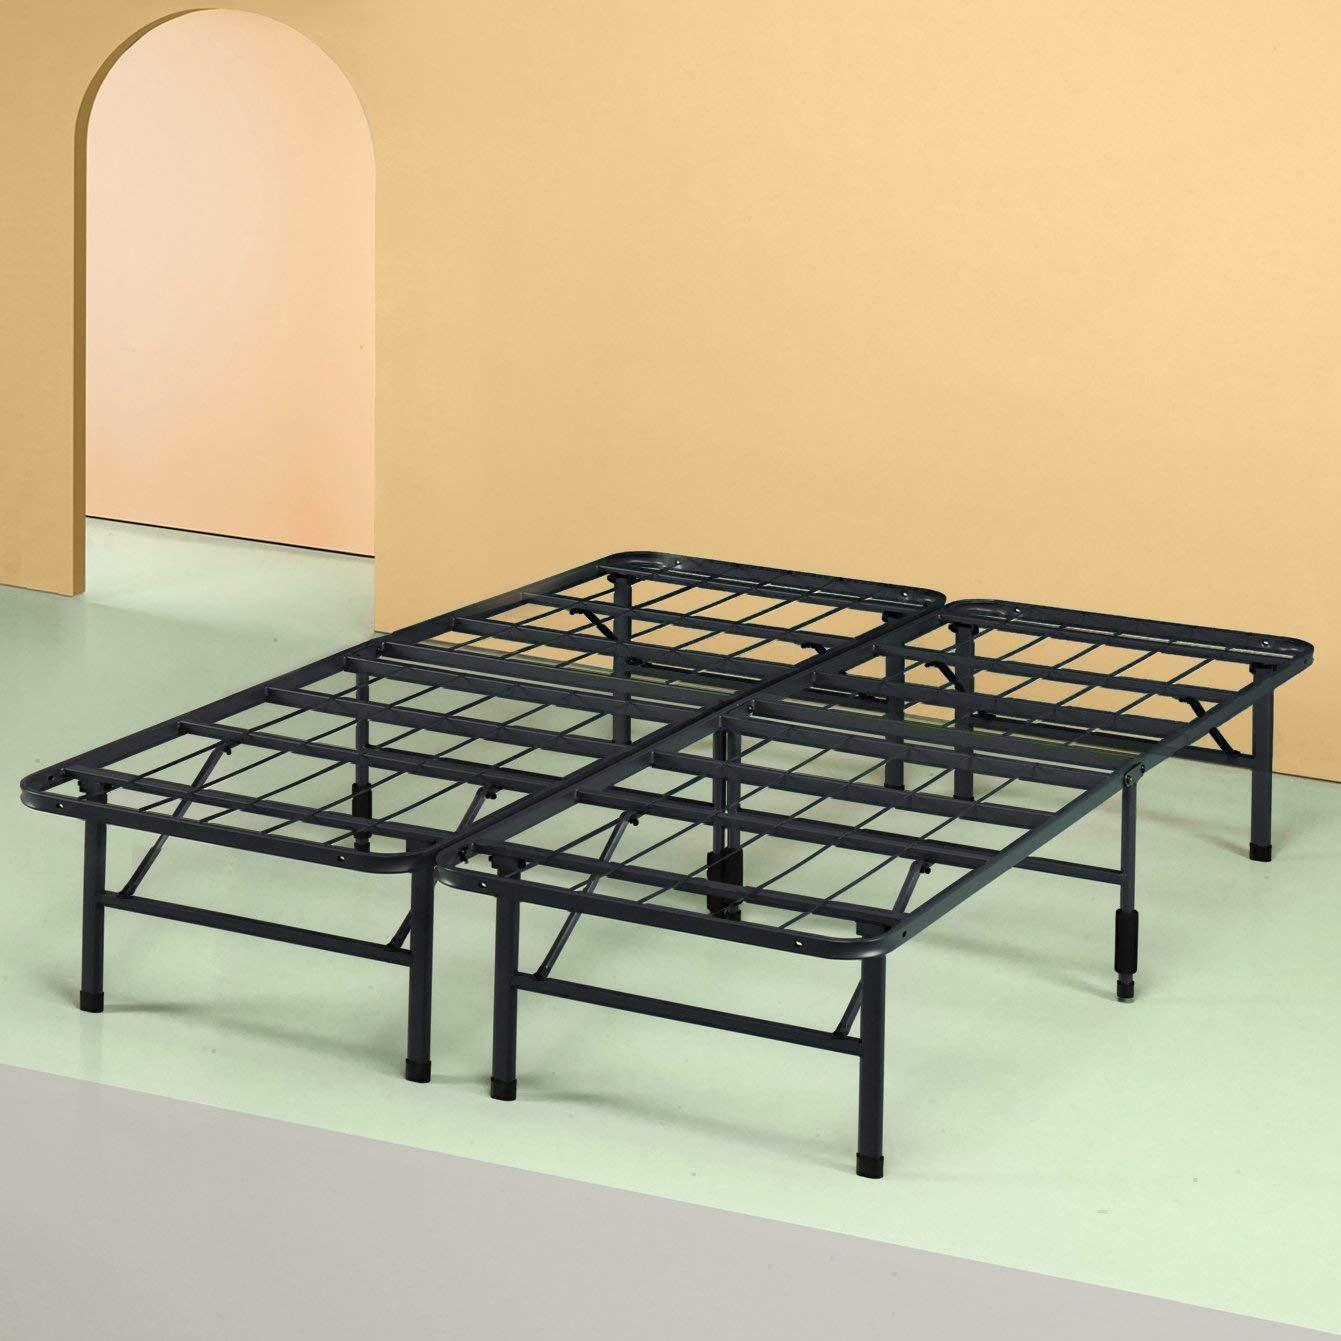 19 Best Metal Bed Frames 2020 The, Metal Bed Frame Bumpers